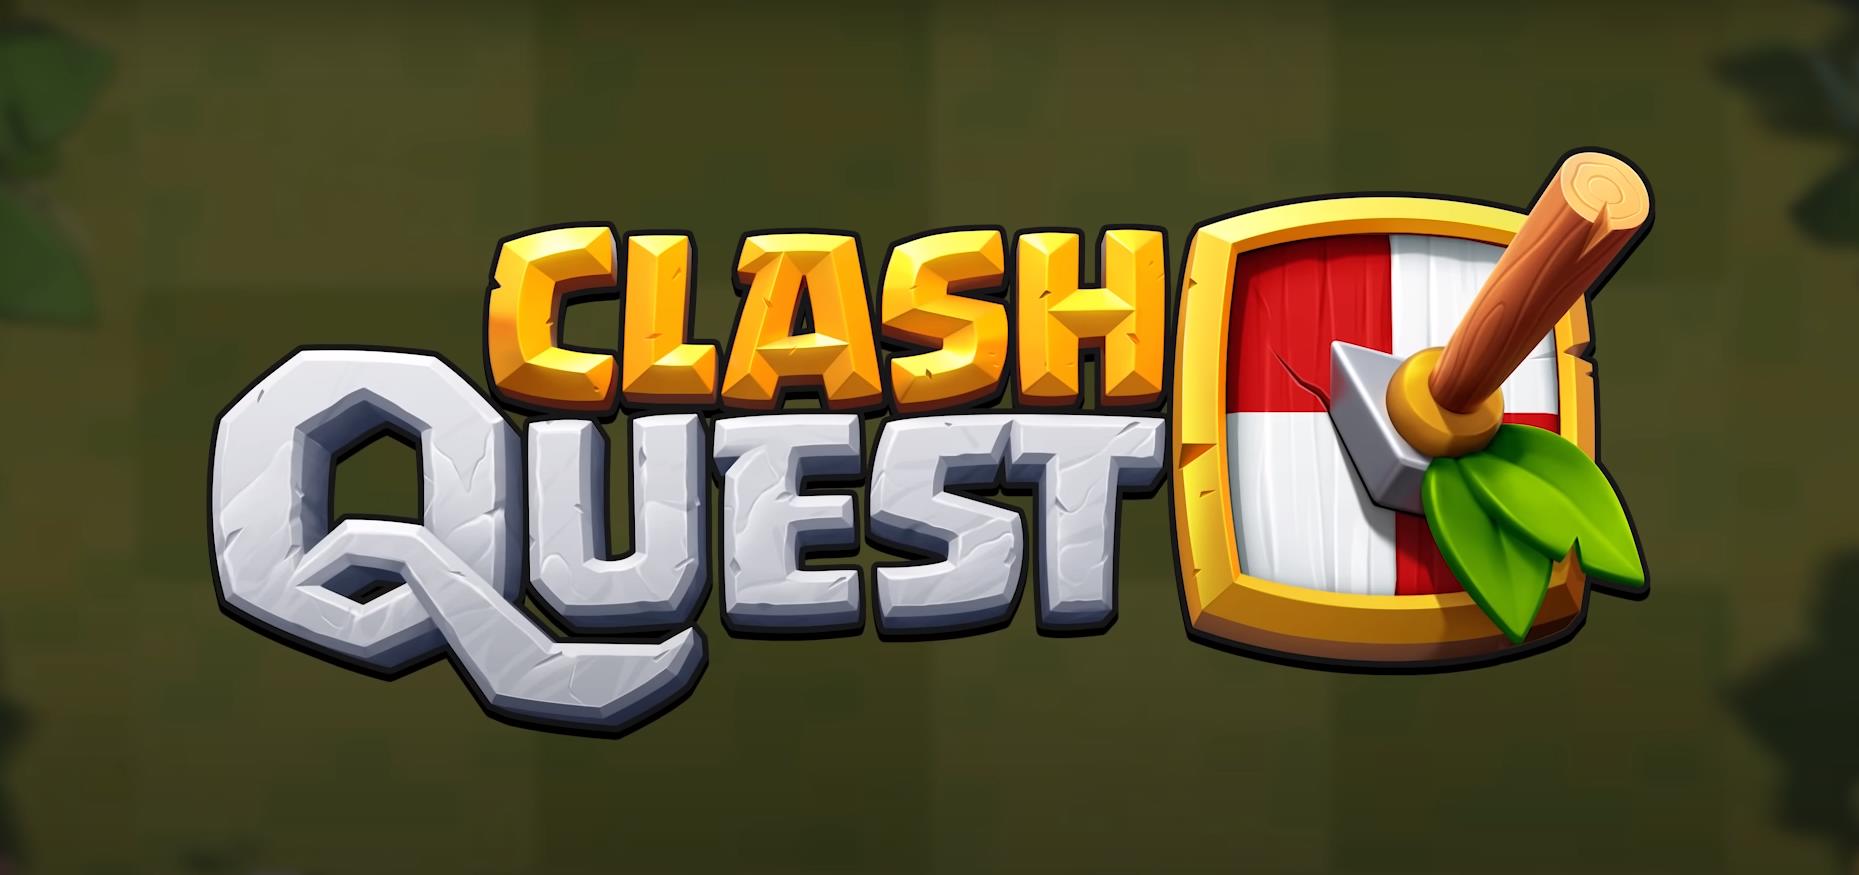 Клеш квест. Клэш квест. Clash Quest иконка. Игры суперселл 2021. Клэш квест геймплей.